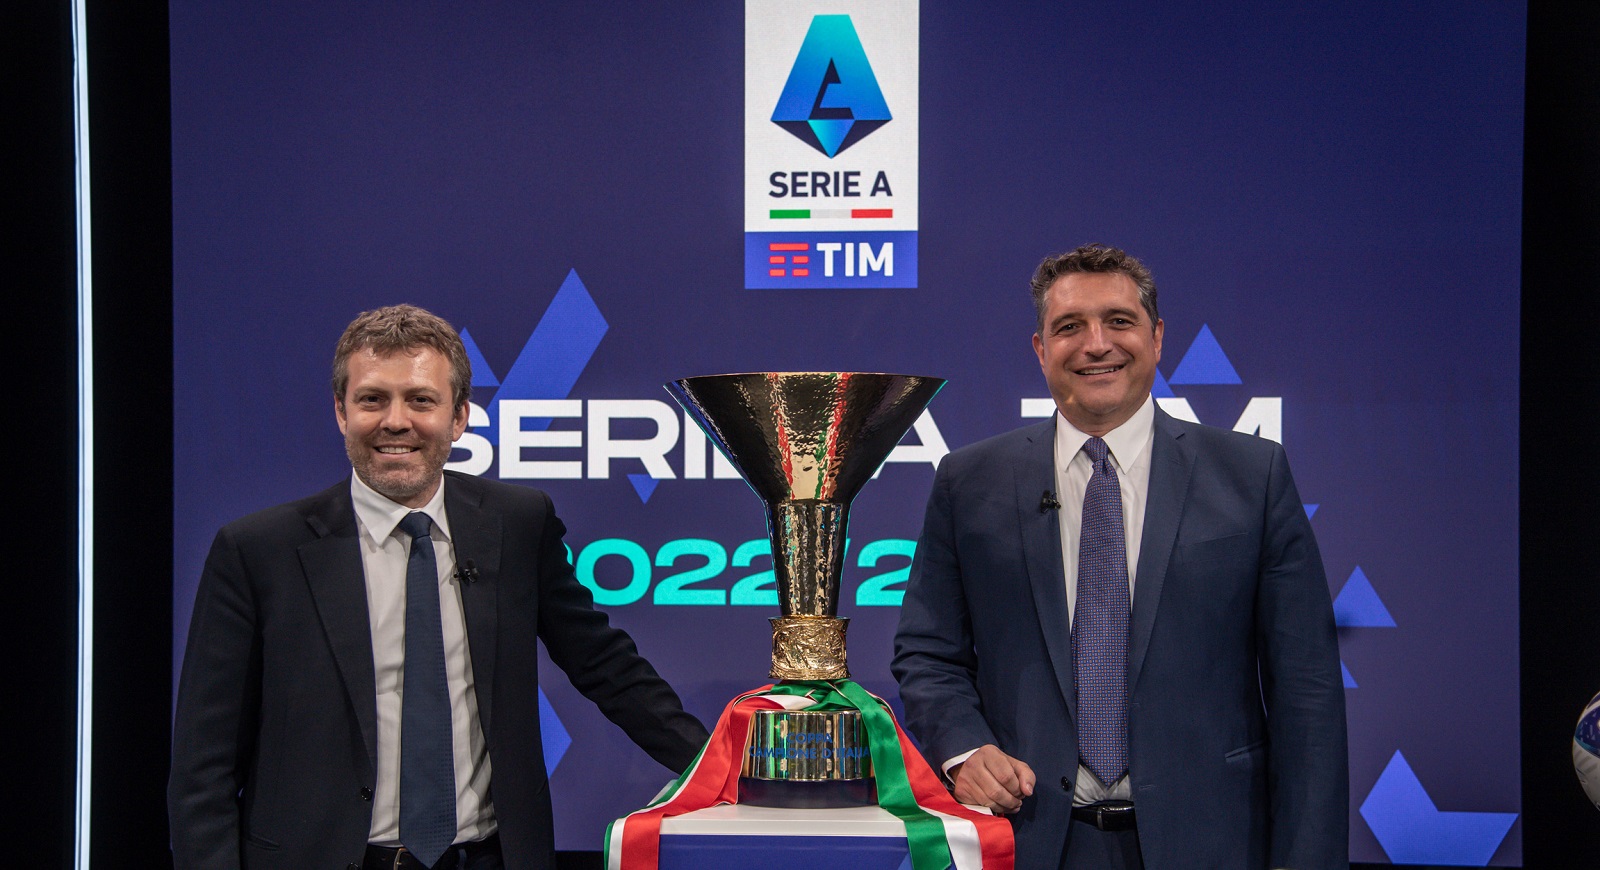 Serie A, Casini e De Servio.